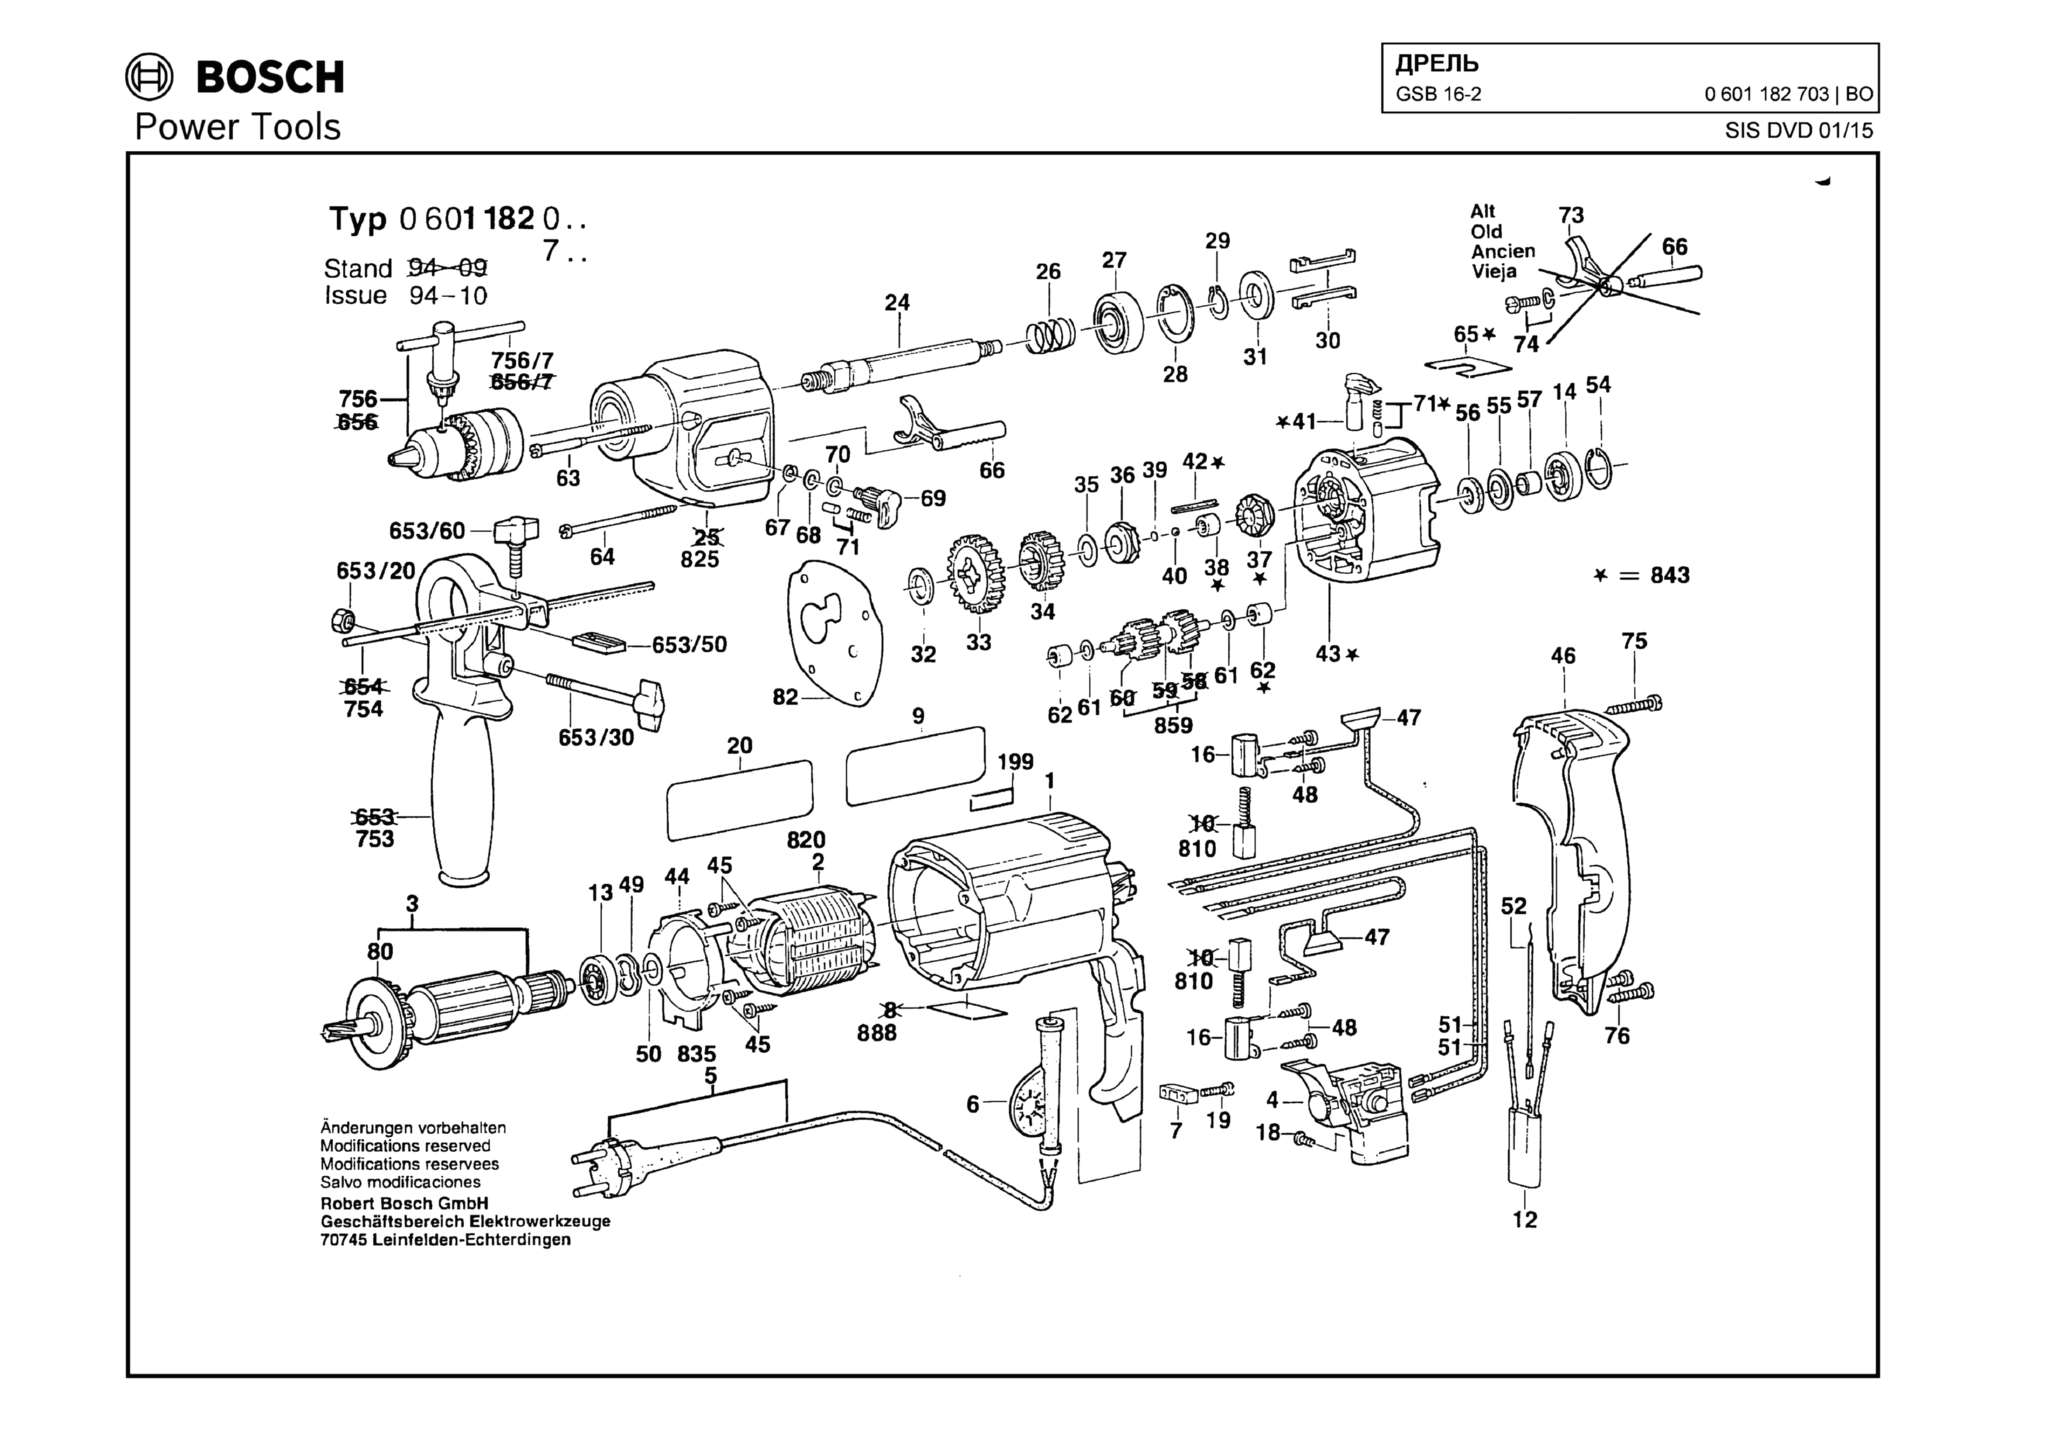 Запчасти, схема и деталировка Bosch GSB 16-2 (ТИП 0601182703)